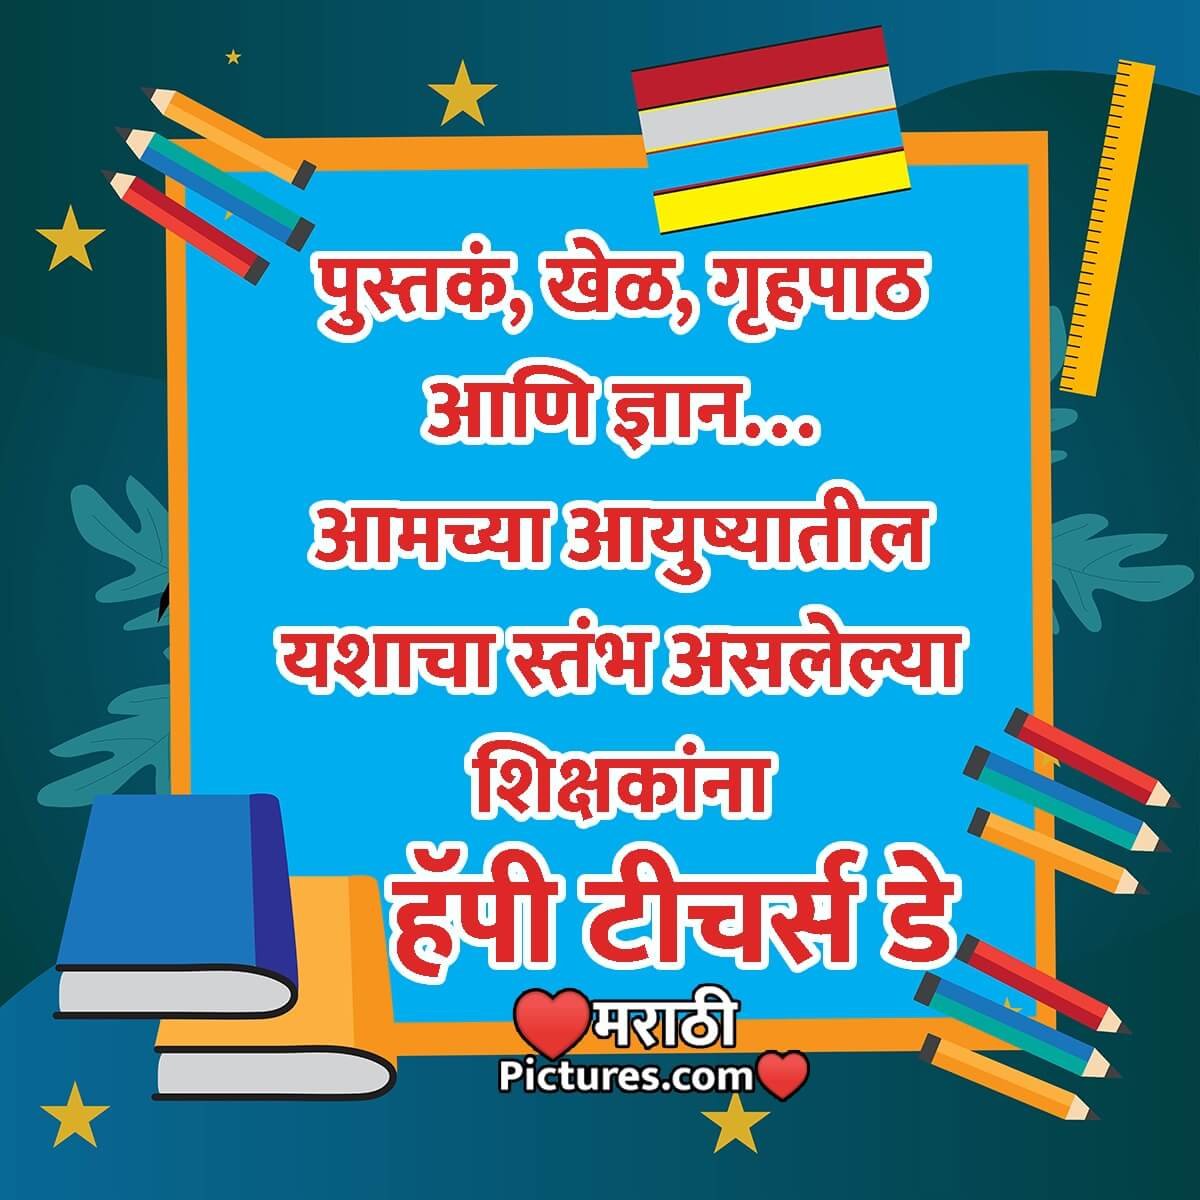 Teacher’s Day Messages In Marathi